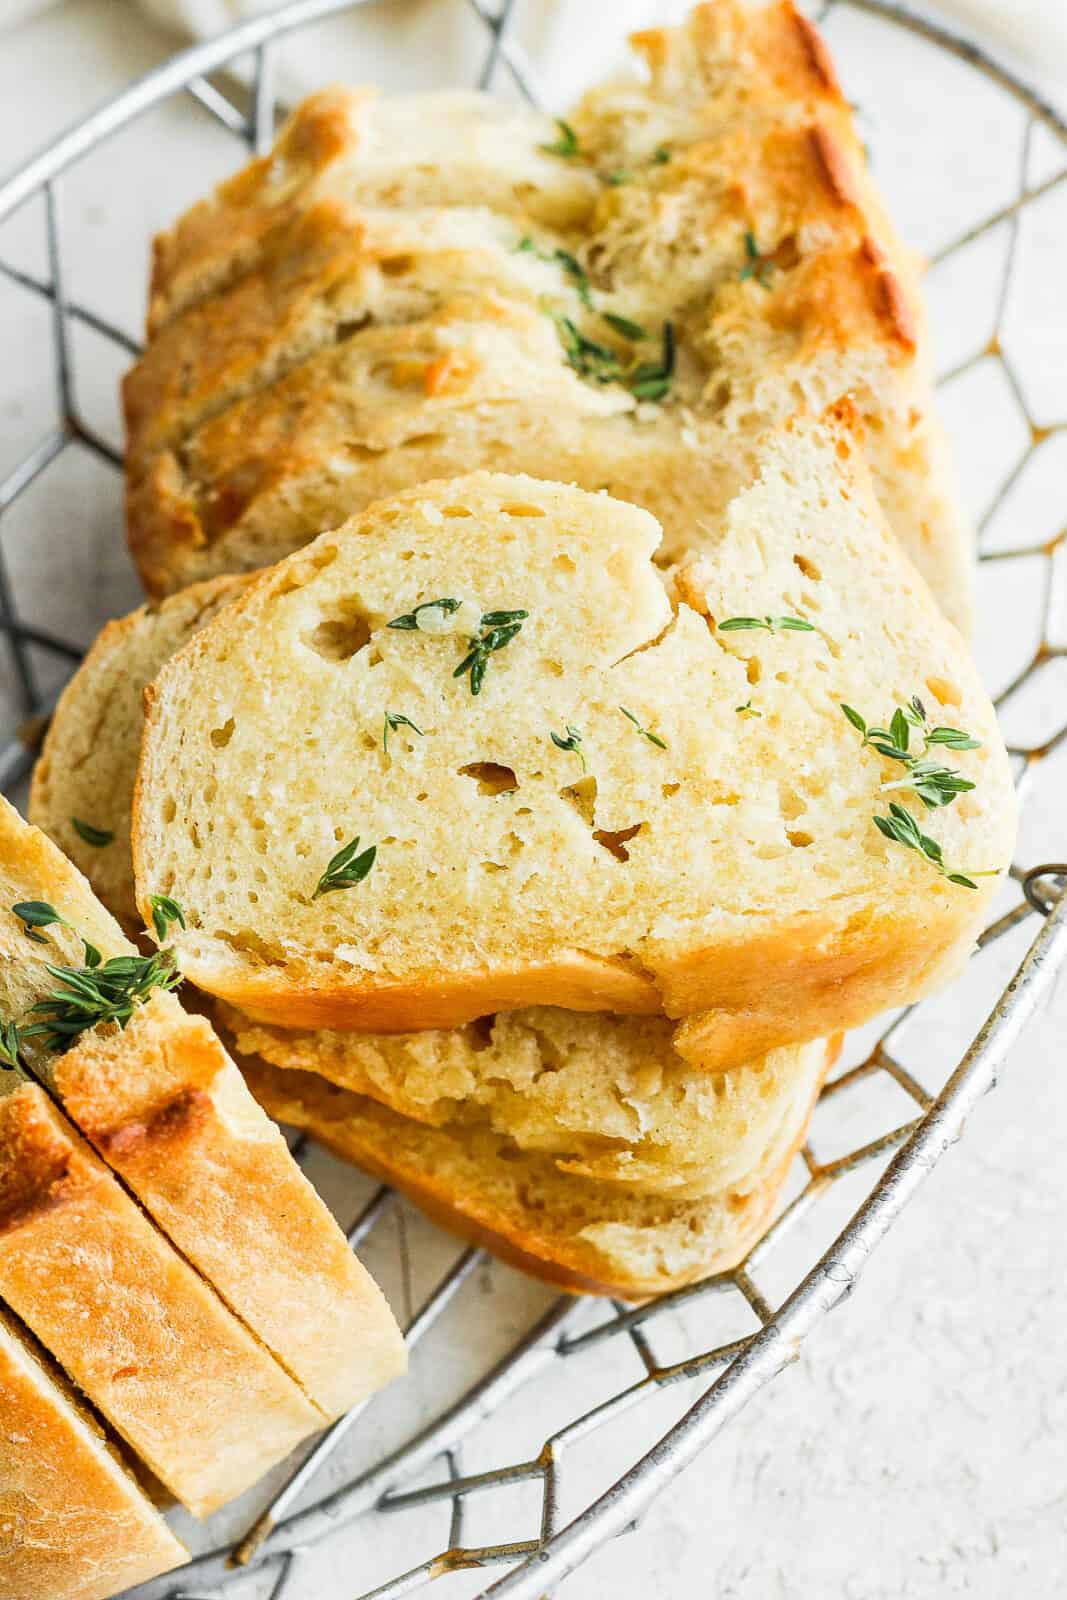 Sliced garlic bread in a basket.